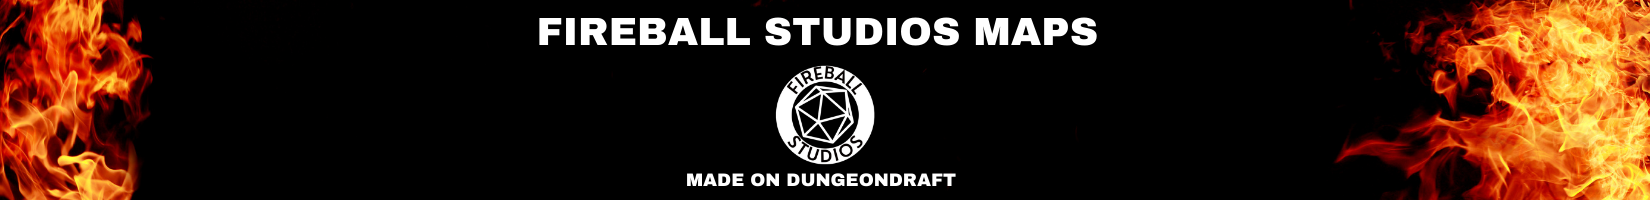 Fireball Studios